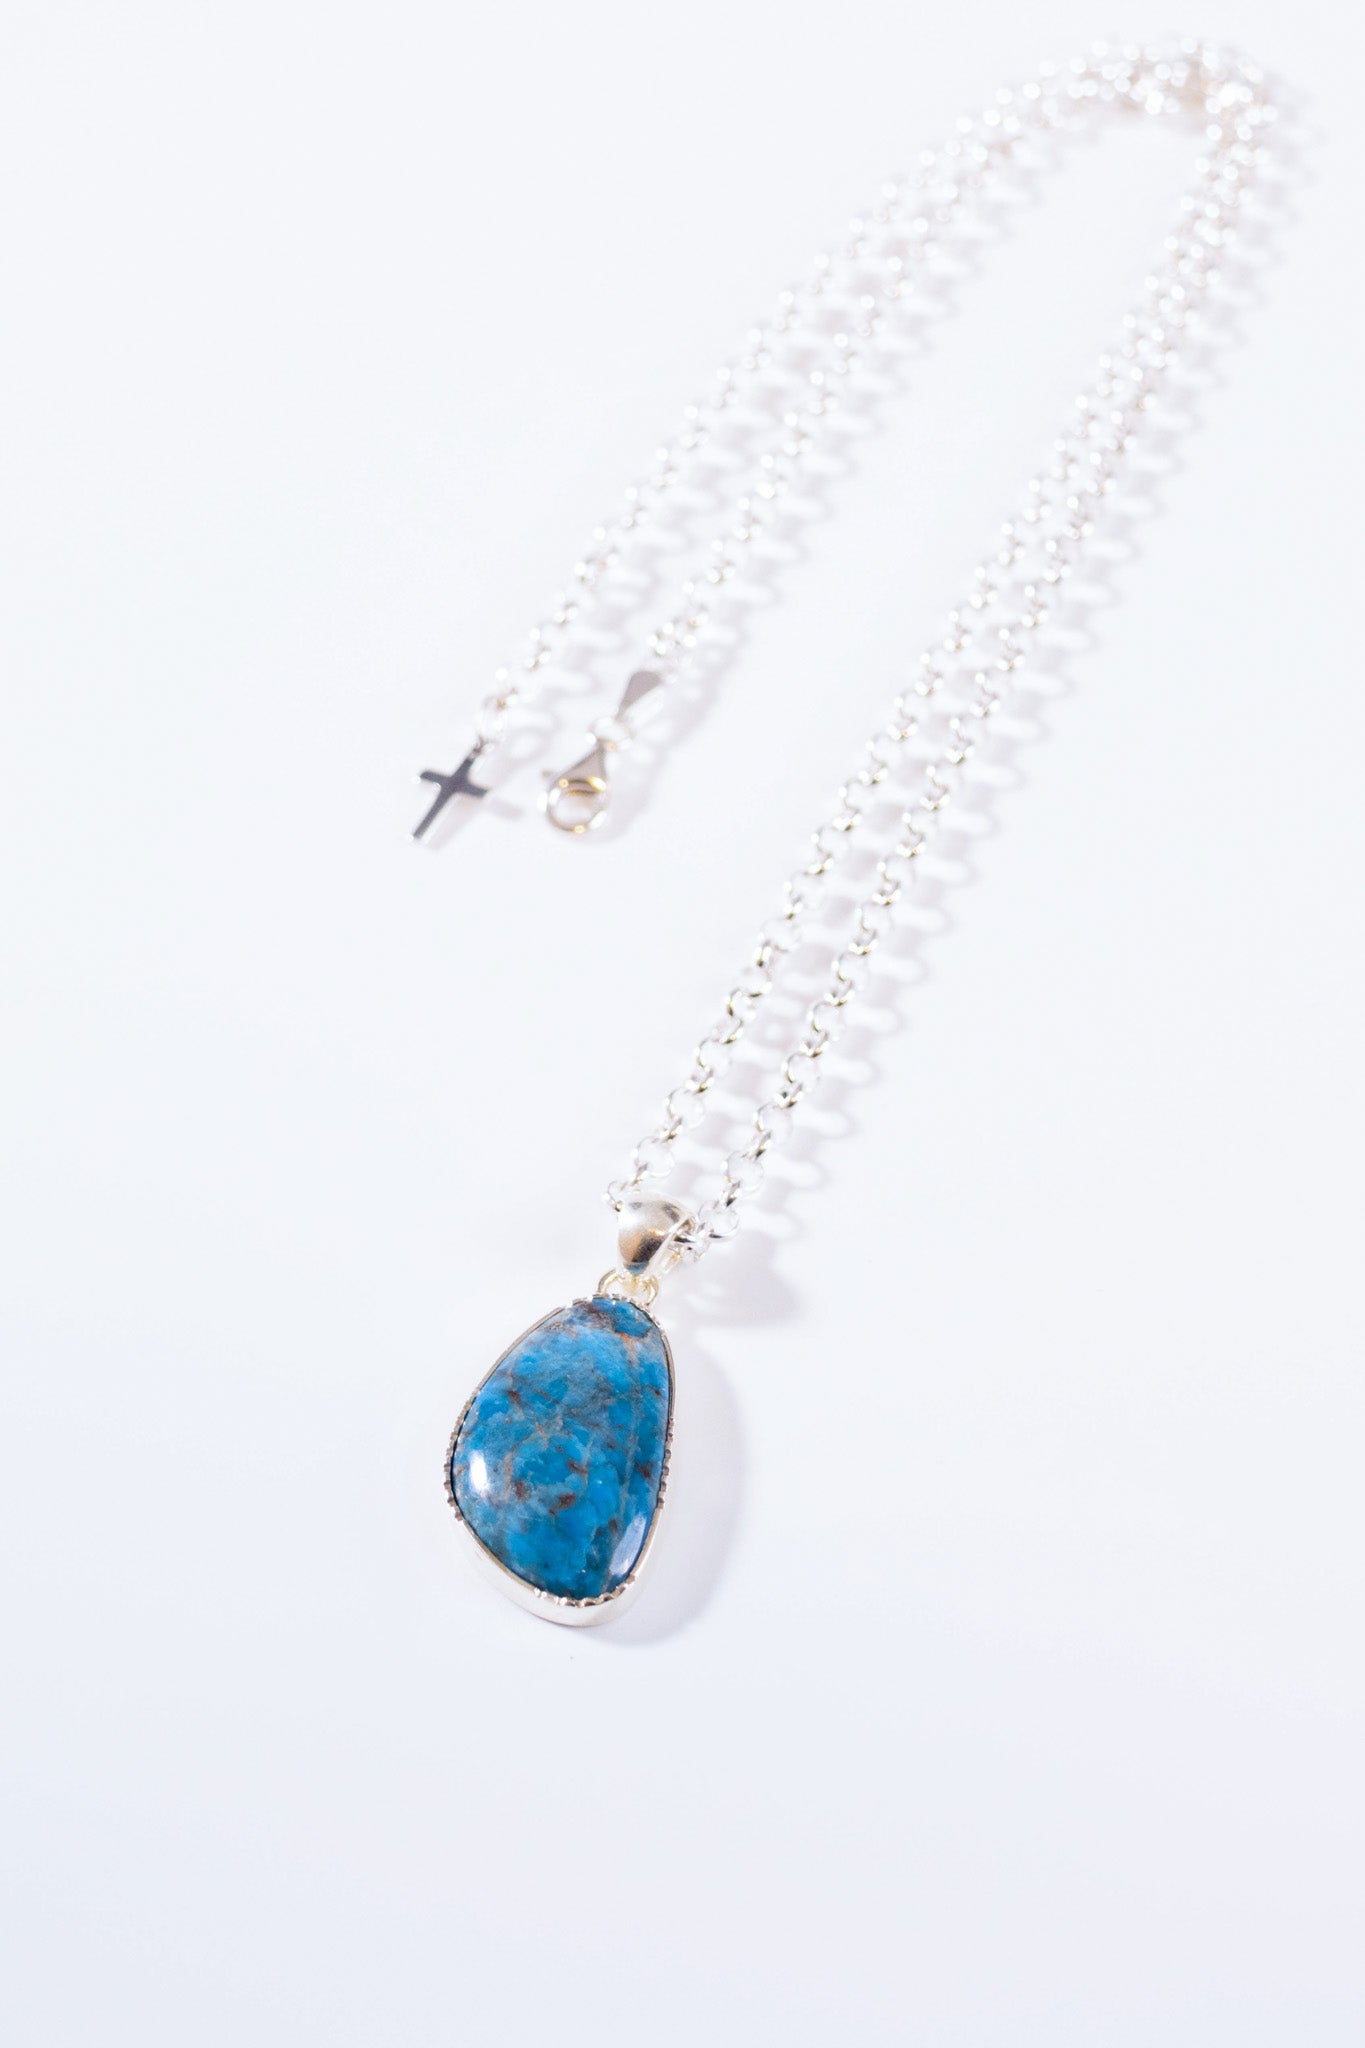 【nanan bijouxxx×StyleReborn】Together Stone Collection  Blue Apatite 60cm